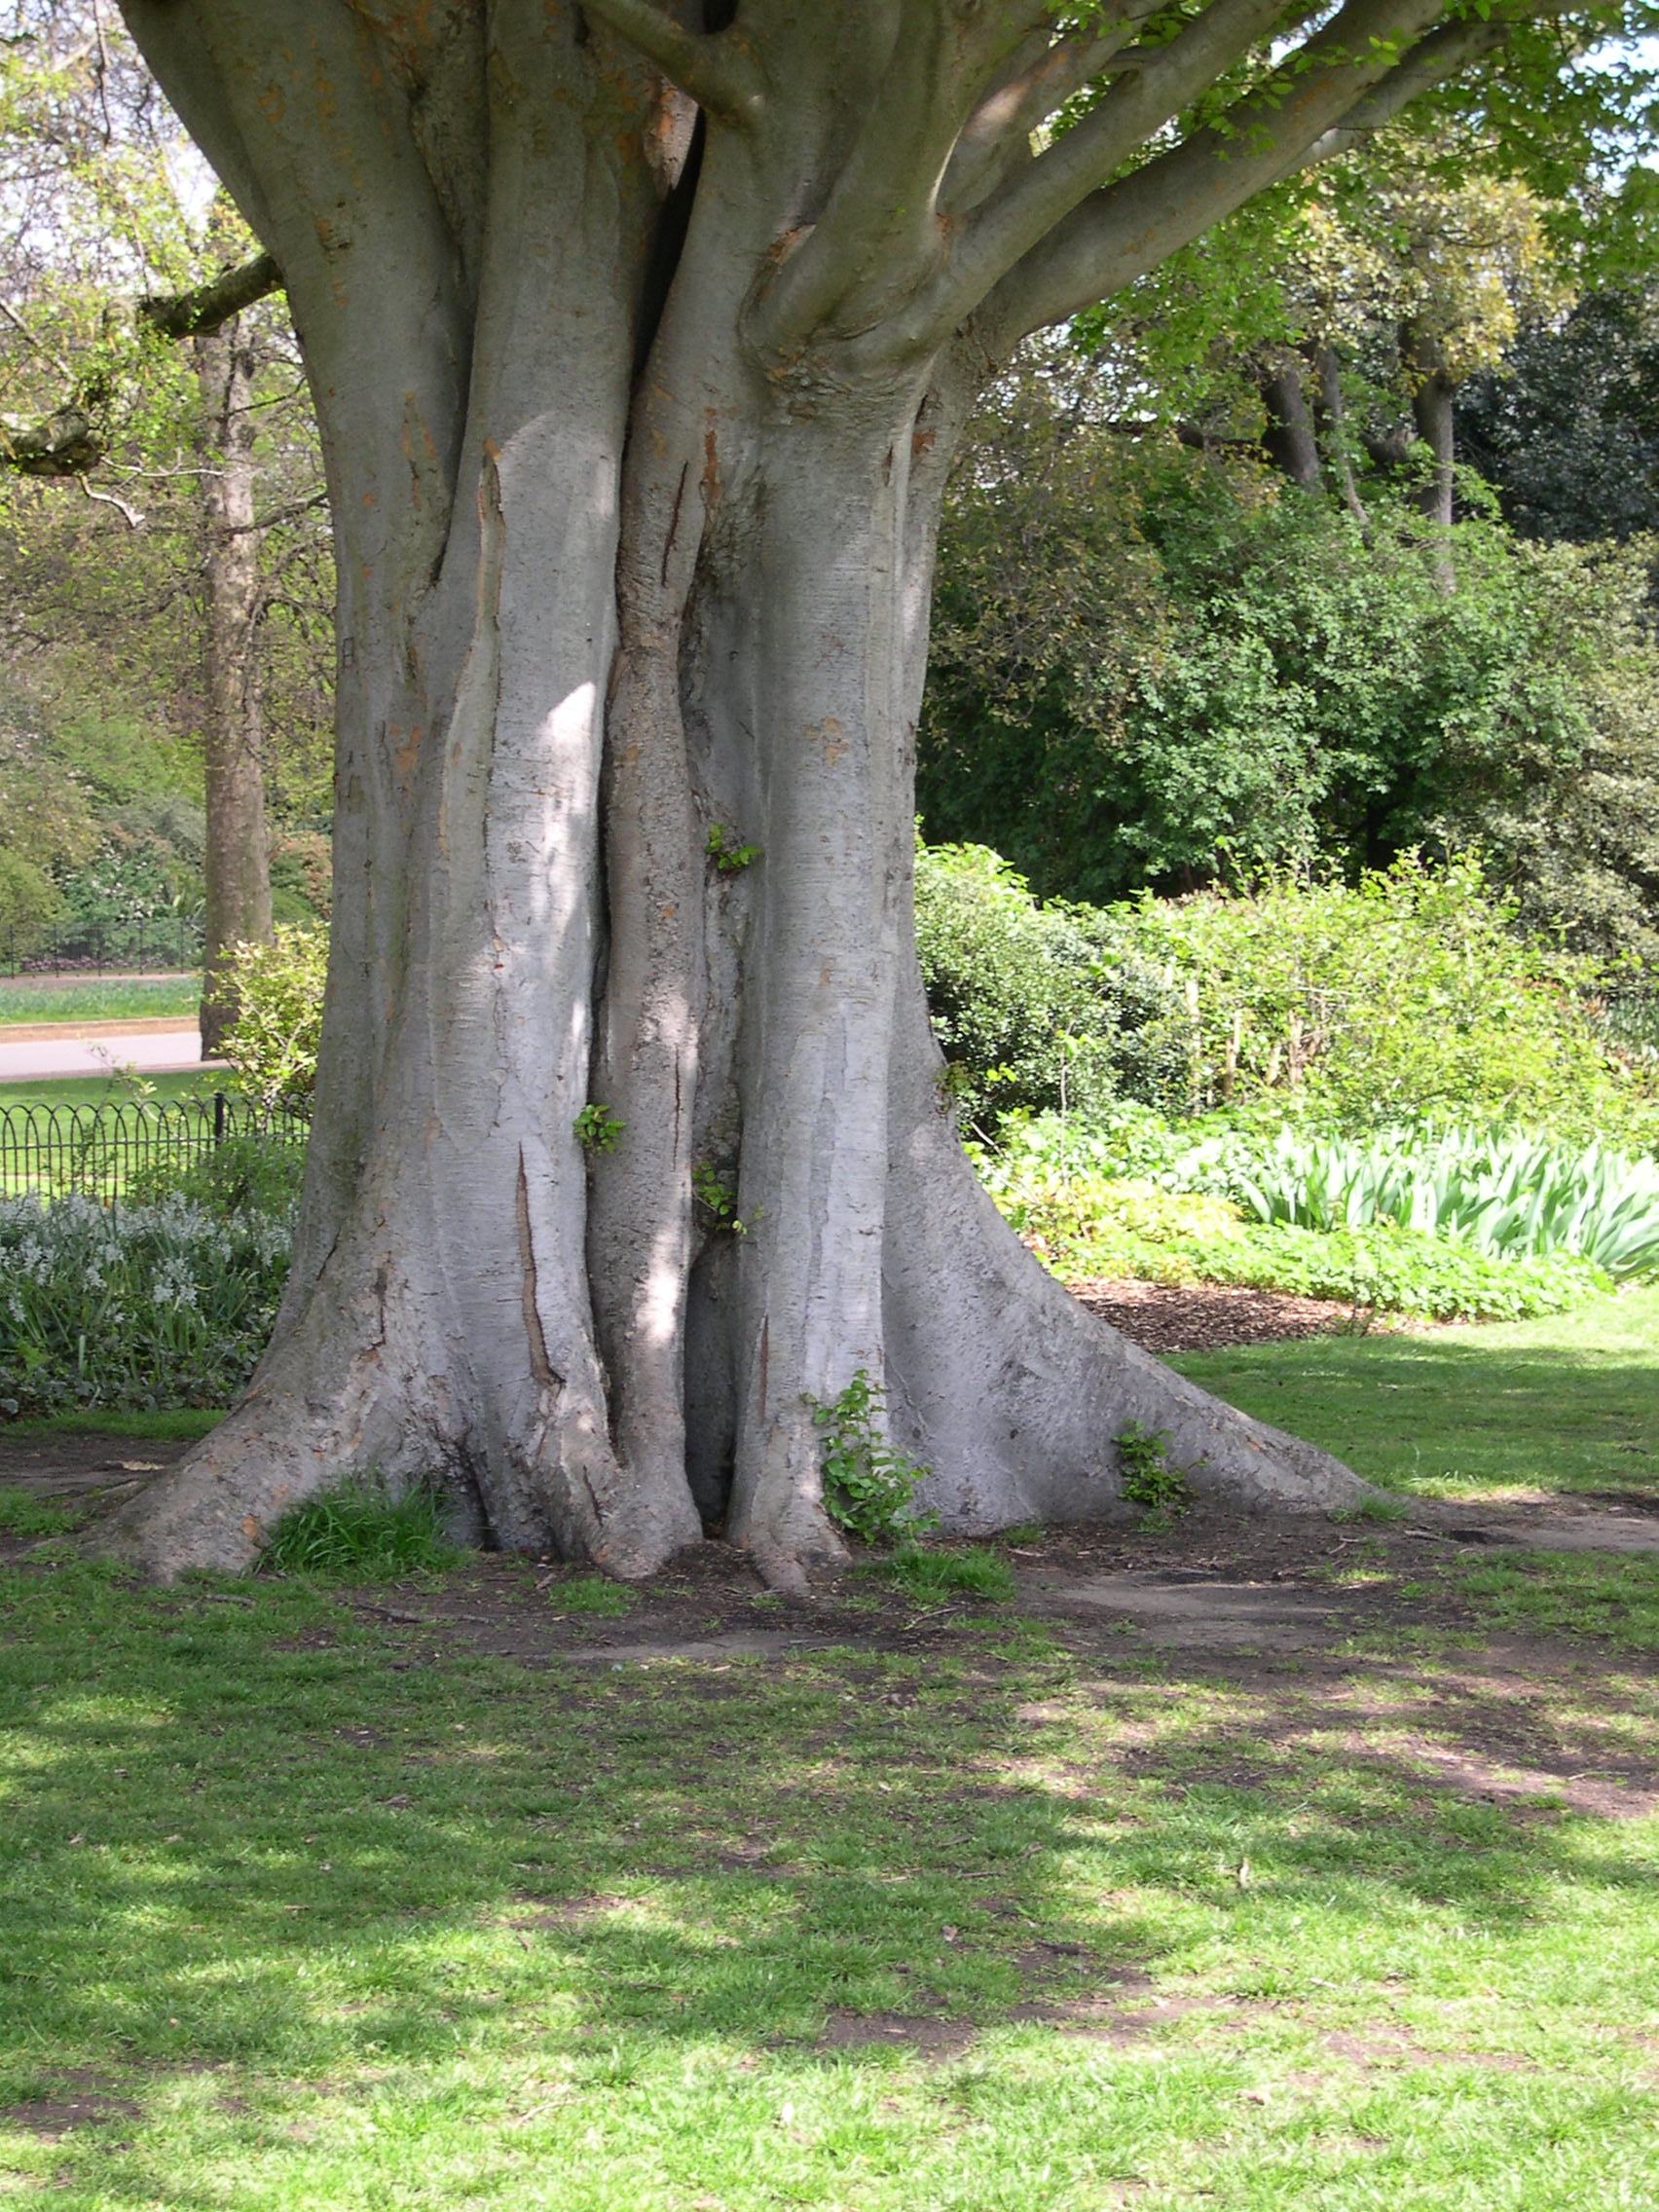 A Banyan tree in Hyde Park, London?